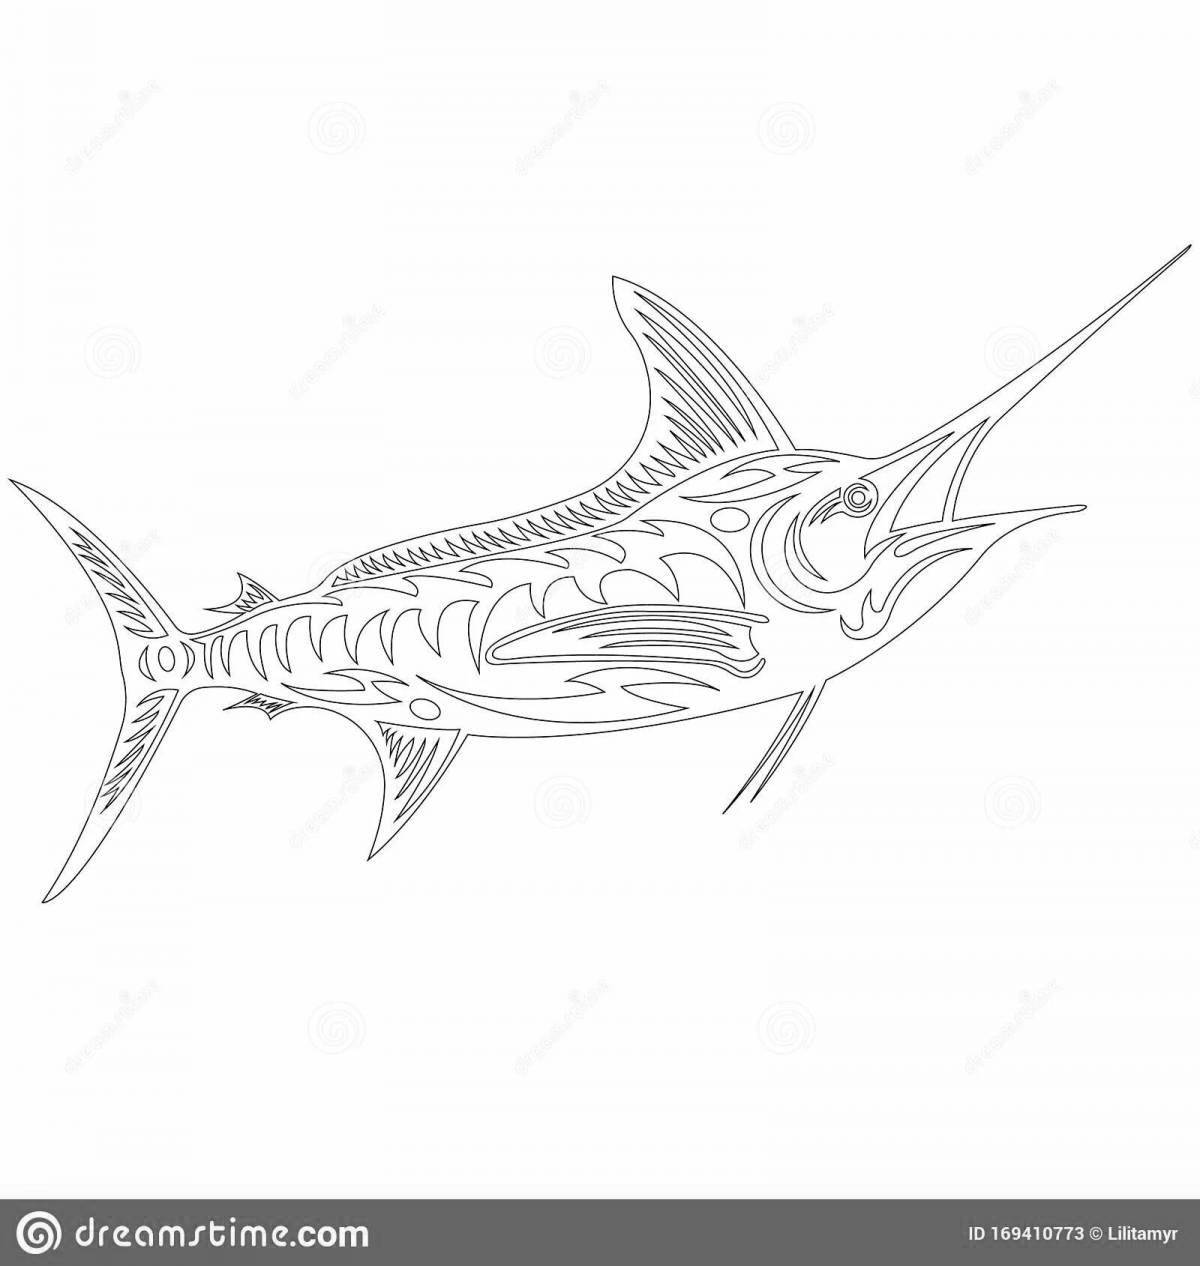 Adorable marlin fish coloring page